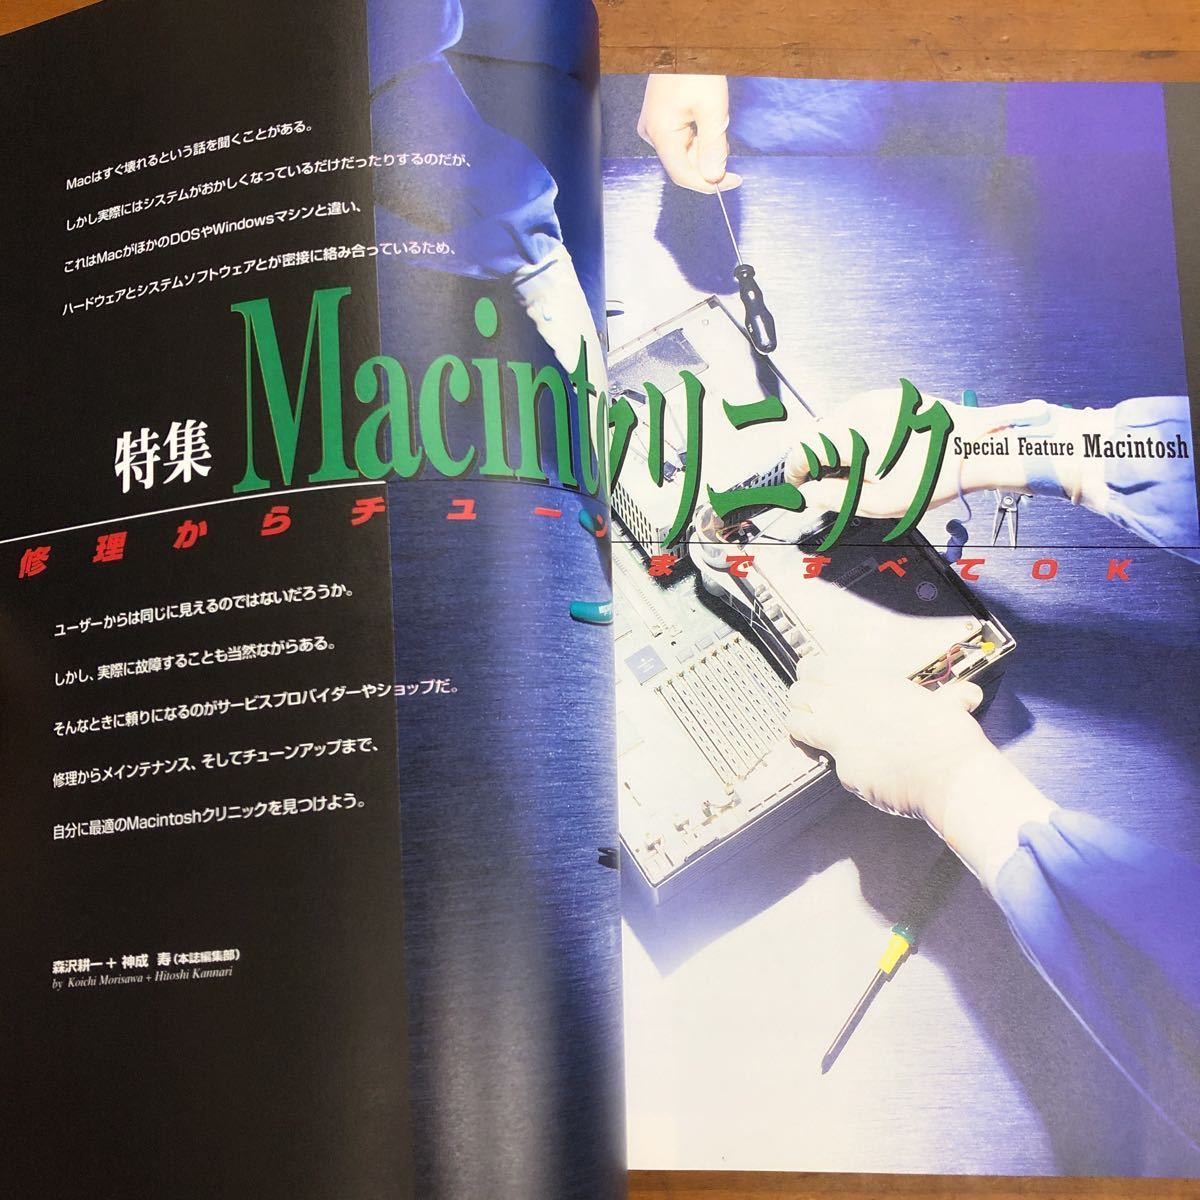 Mac world JAPAN Mac world Japan special collection Macintoshklinik Mac world communication z* Japan 1995 year 9 month 1 day issue 